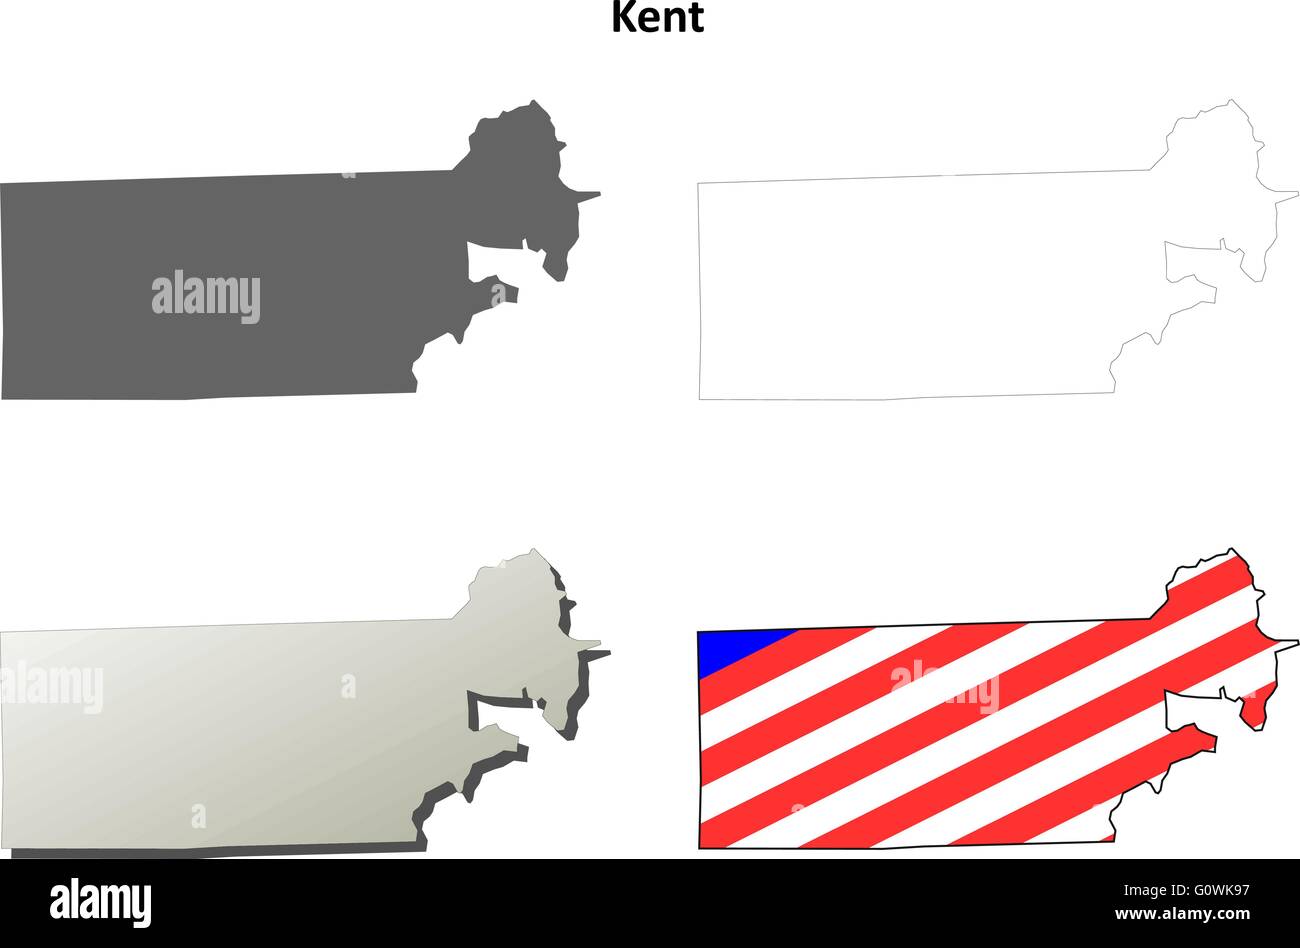 Kent County, Rhode Island outline map set Stock Vector